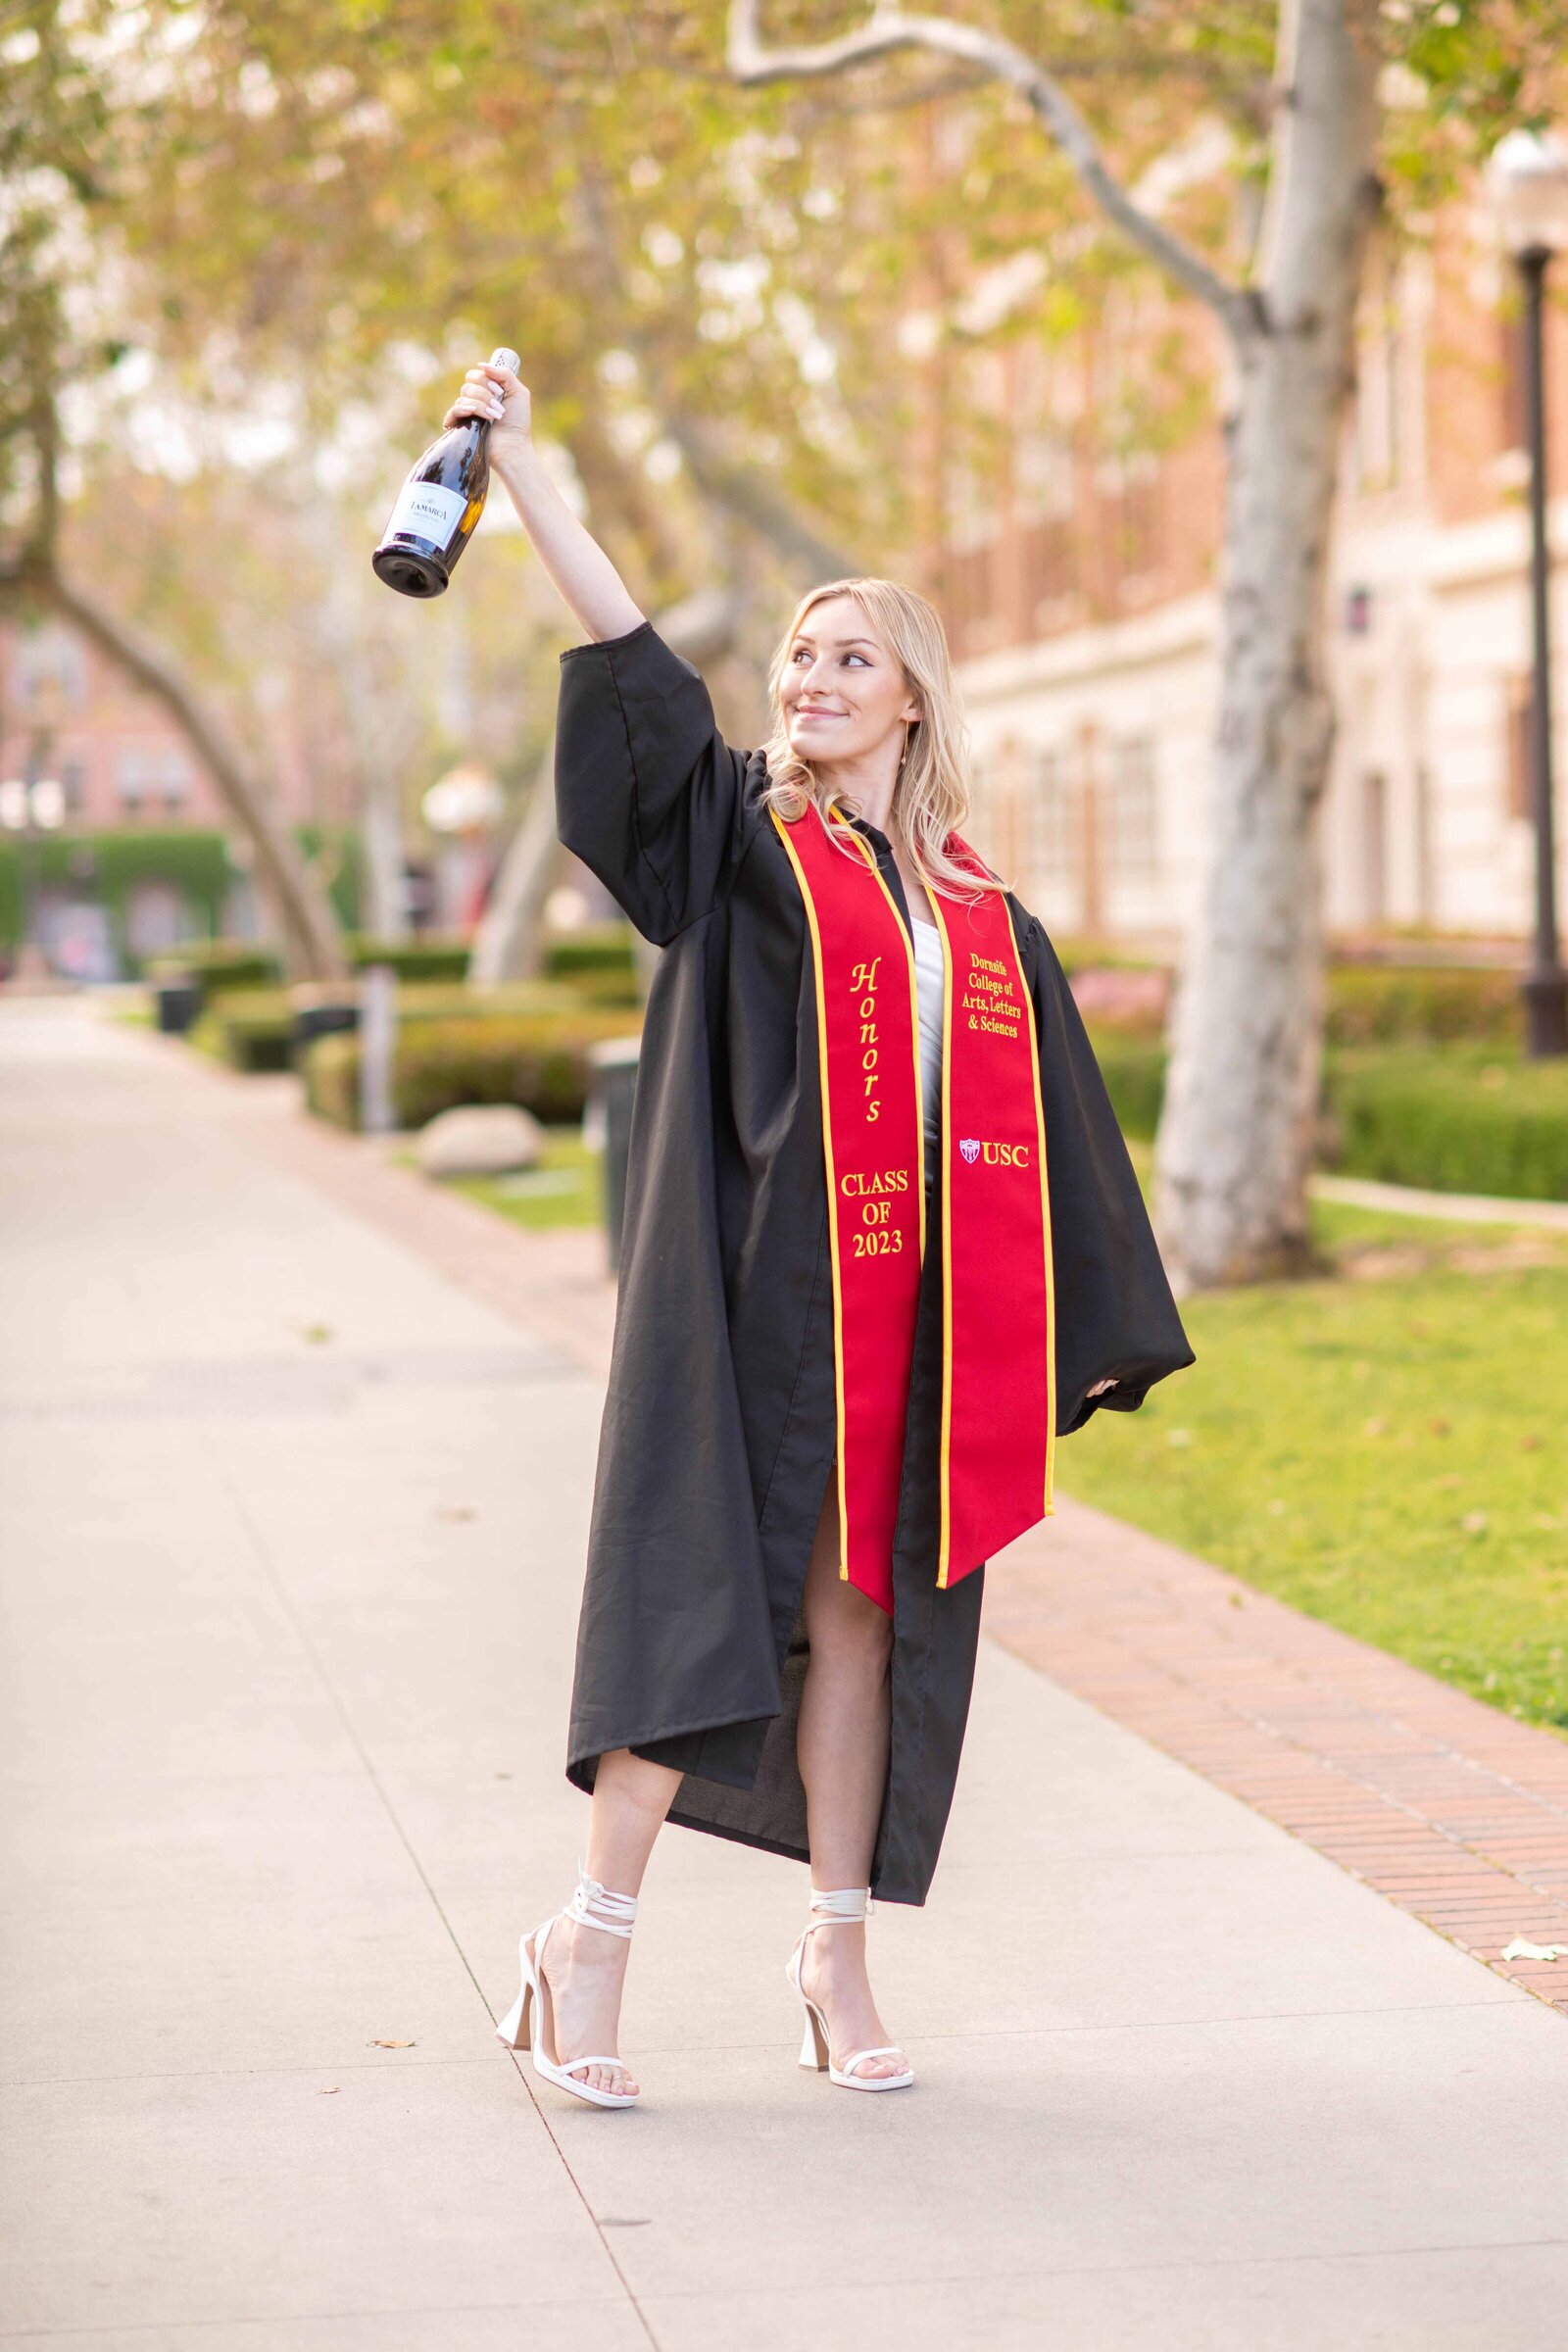 Maria-McCarthy-Photography-USC-graduation-celebration